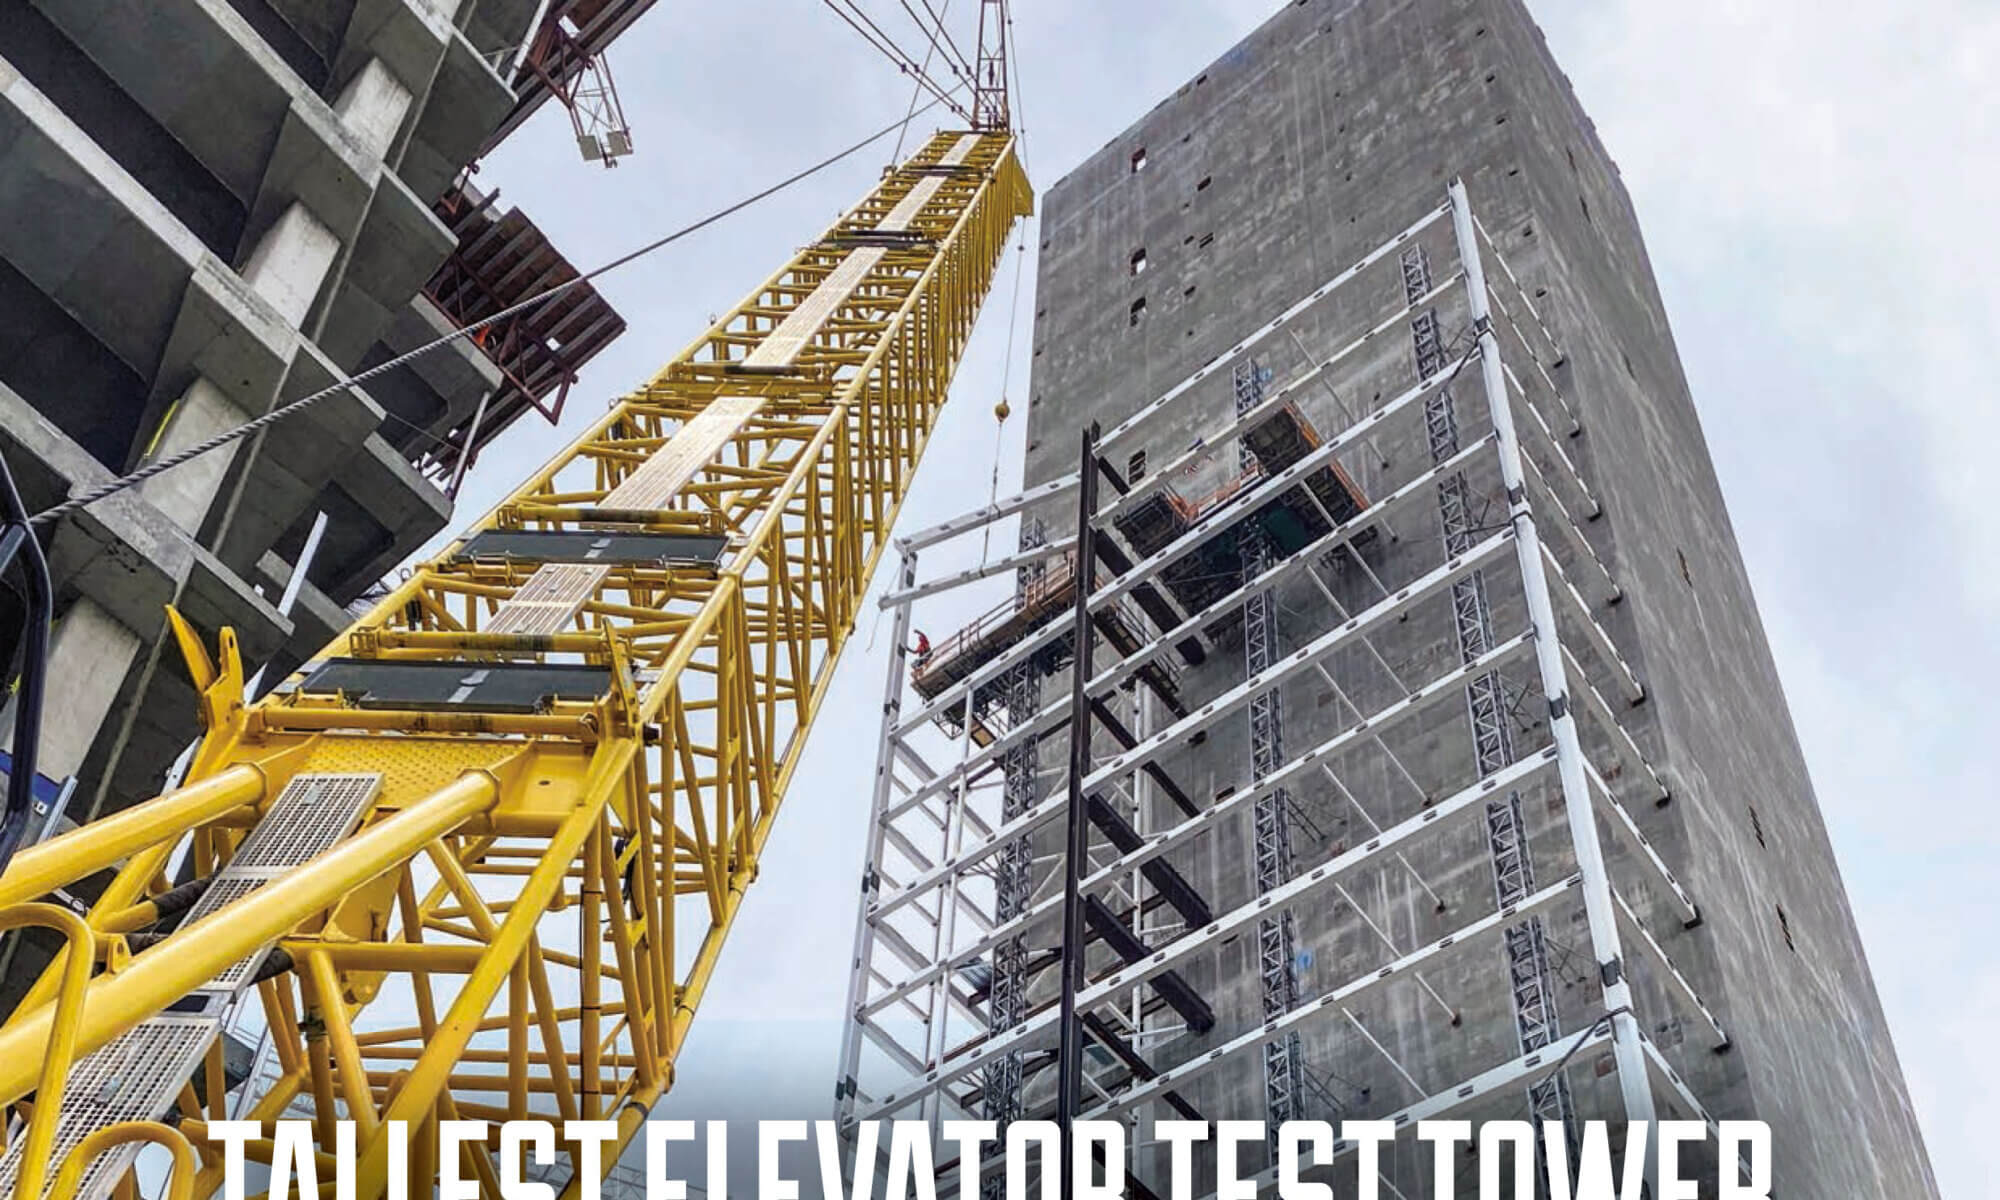 The Ironworker: Thyssenkrupp Elevator's Innovation Article